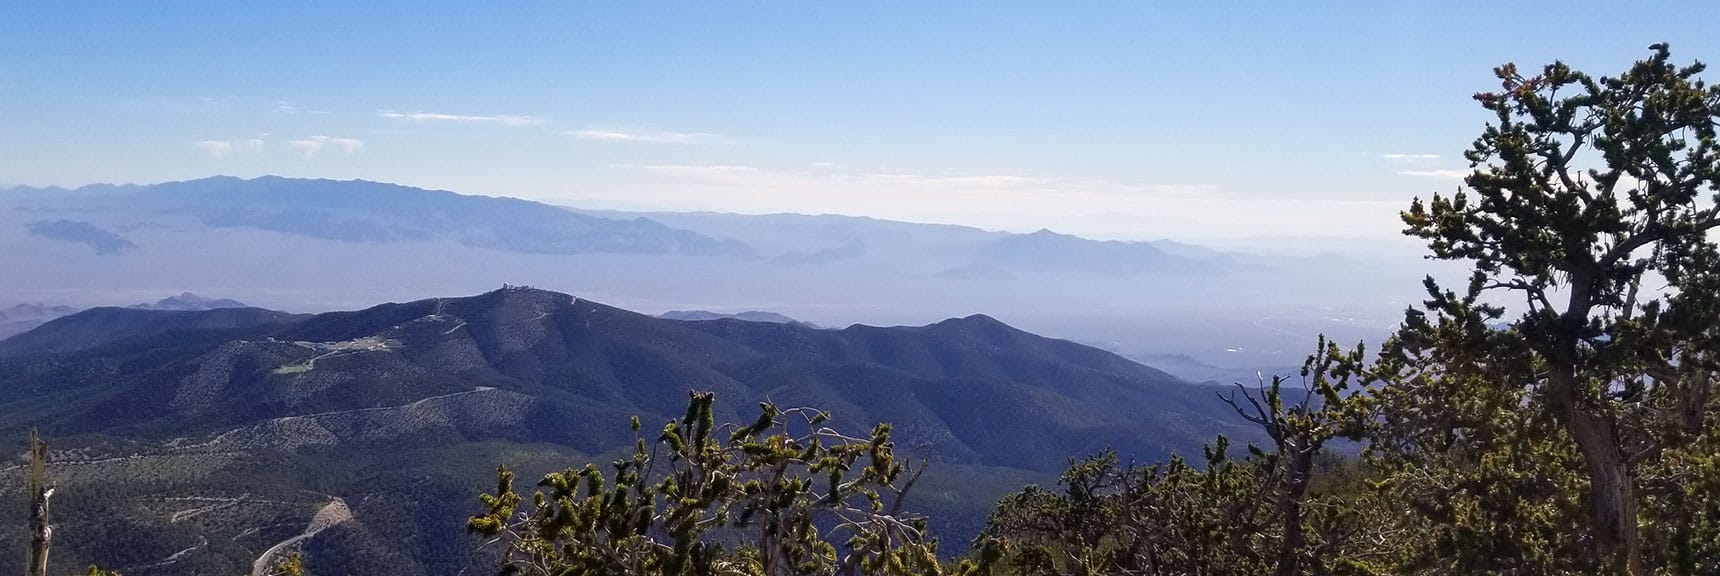 Mt Charleston Observatory with Desert National Wildlife Refuge in Background View from Fletcher Peak